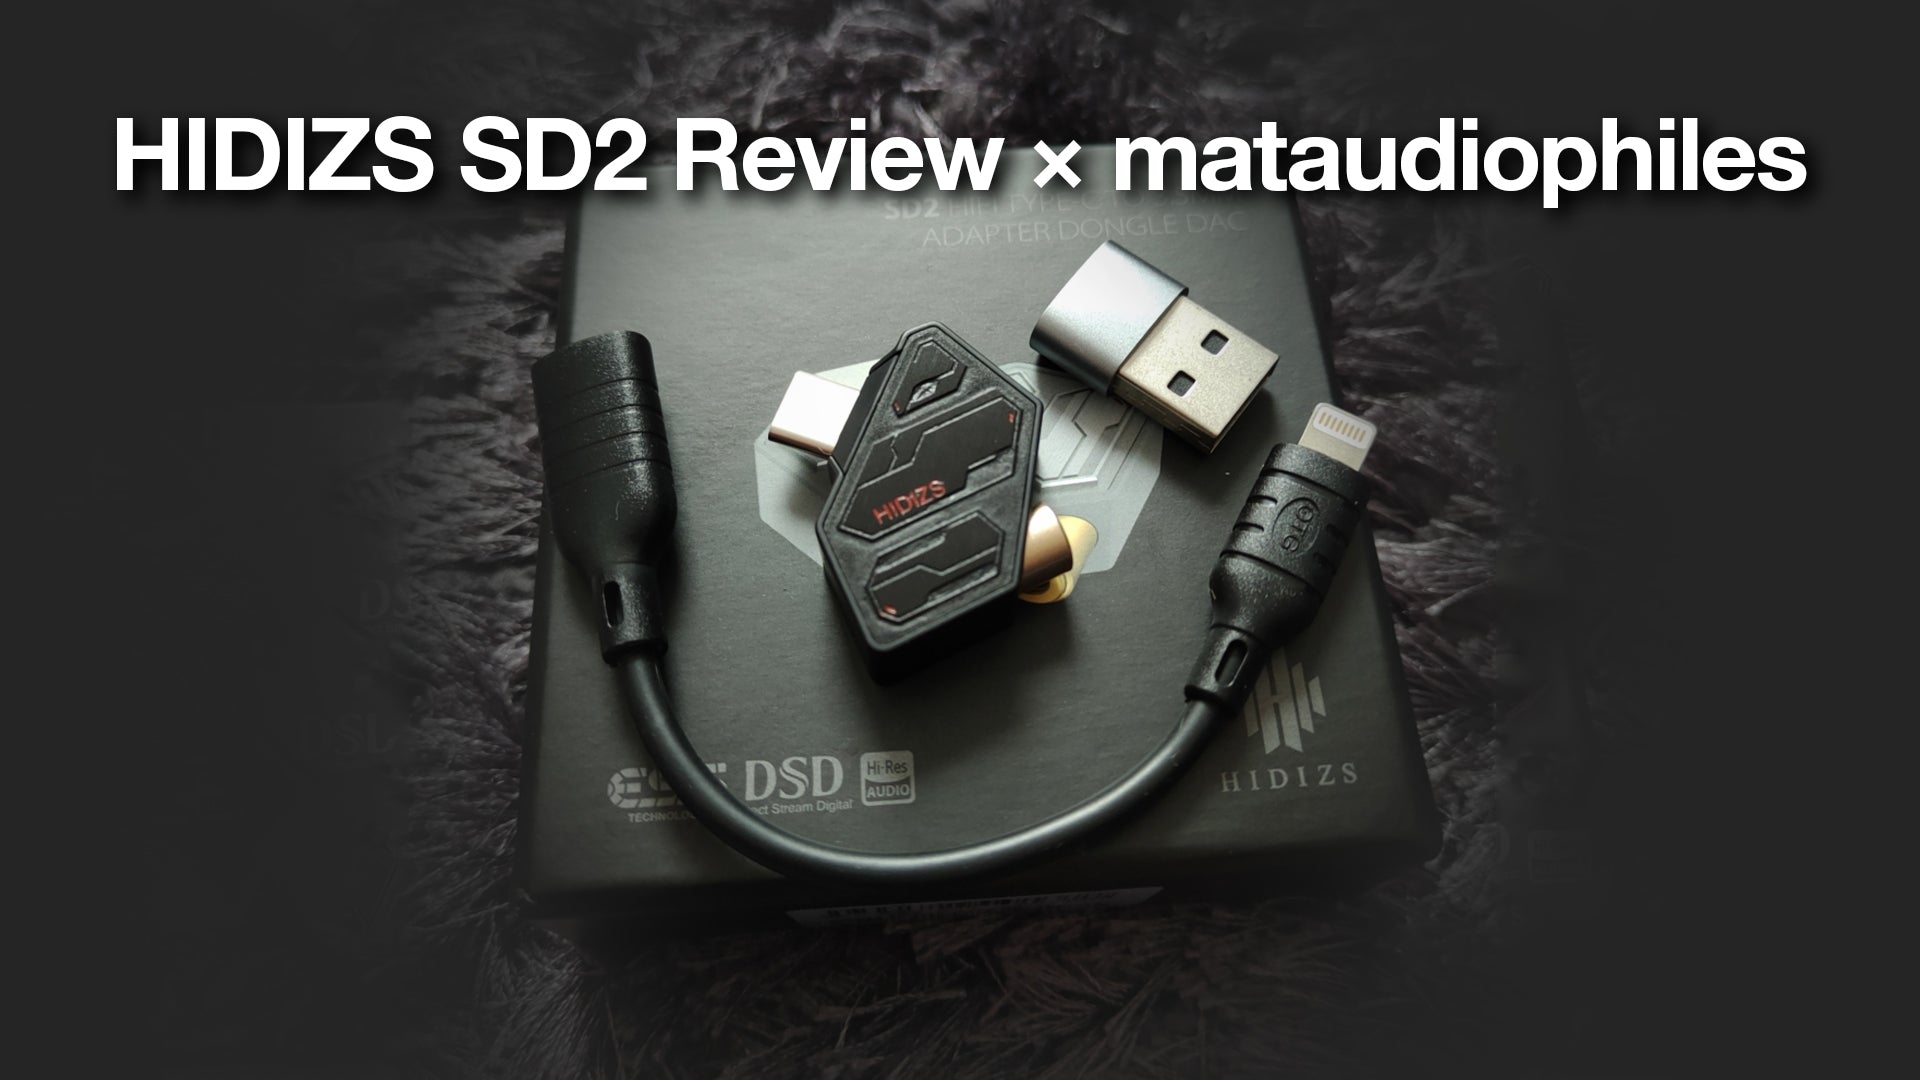 HIDIZS SD2 Review - mataudiophiles